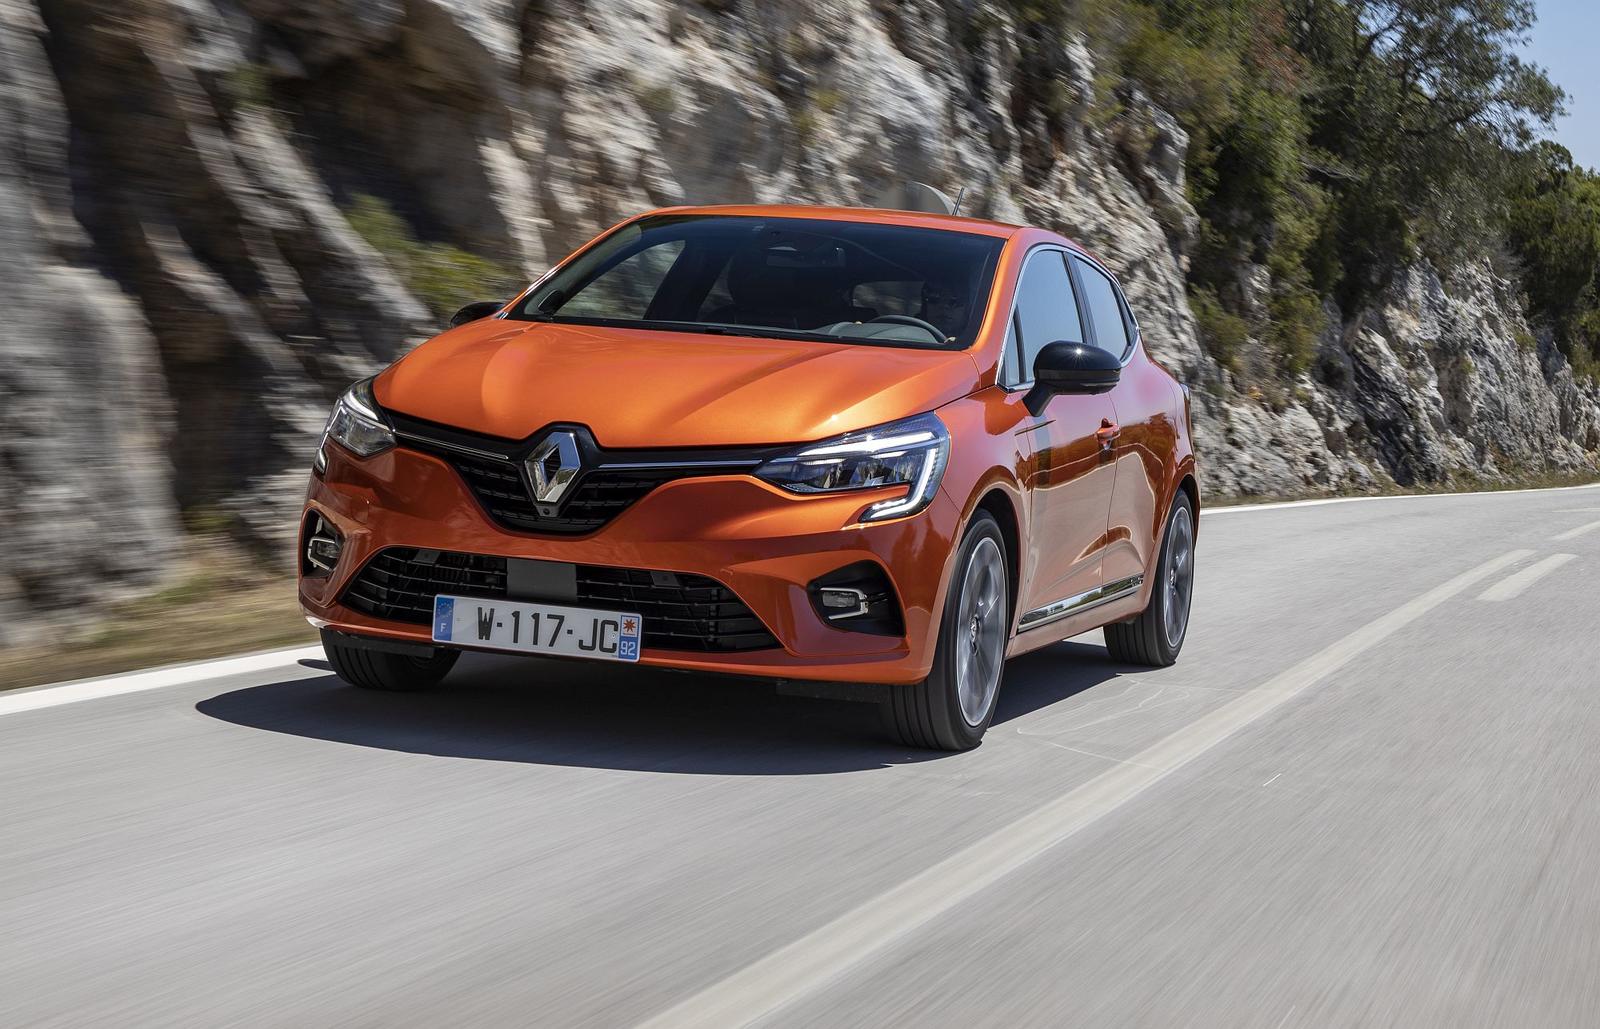 All-new Renault Clio Intens – Orange Valencia (7)